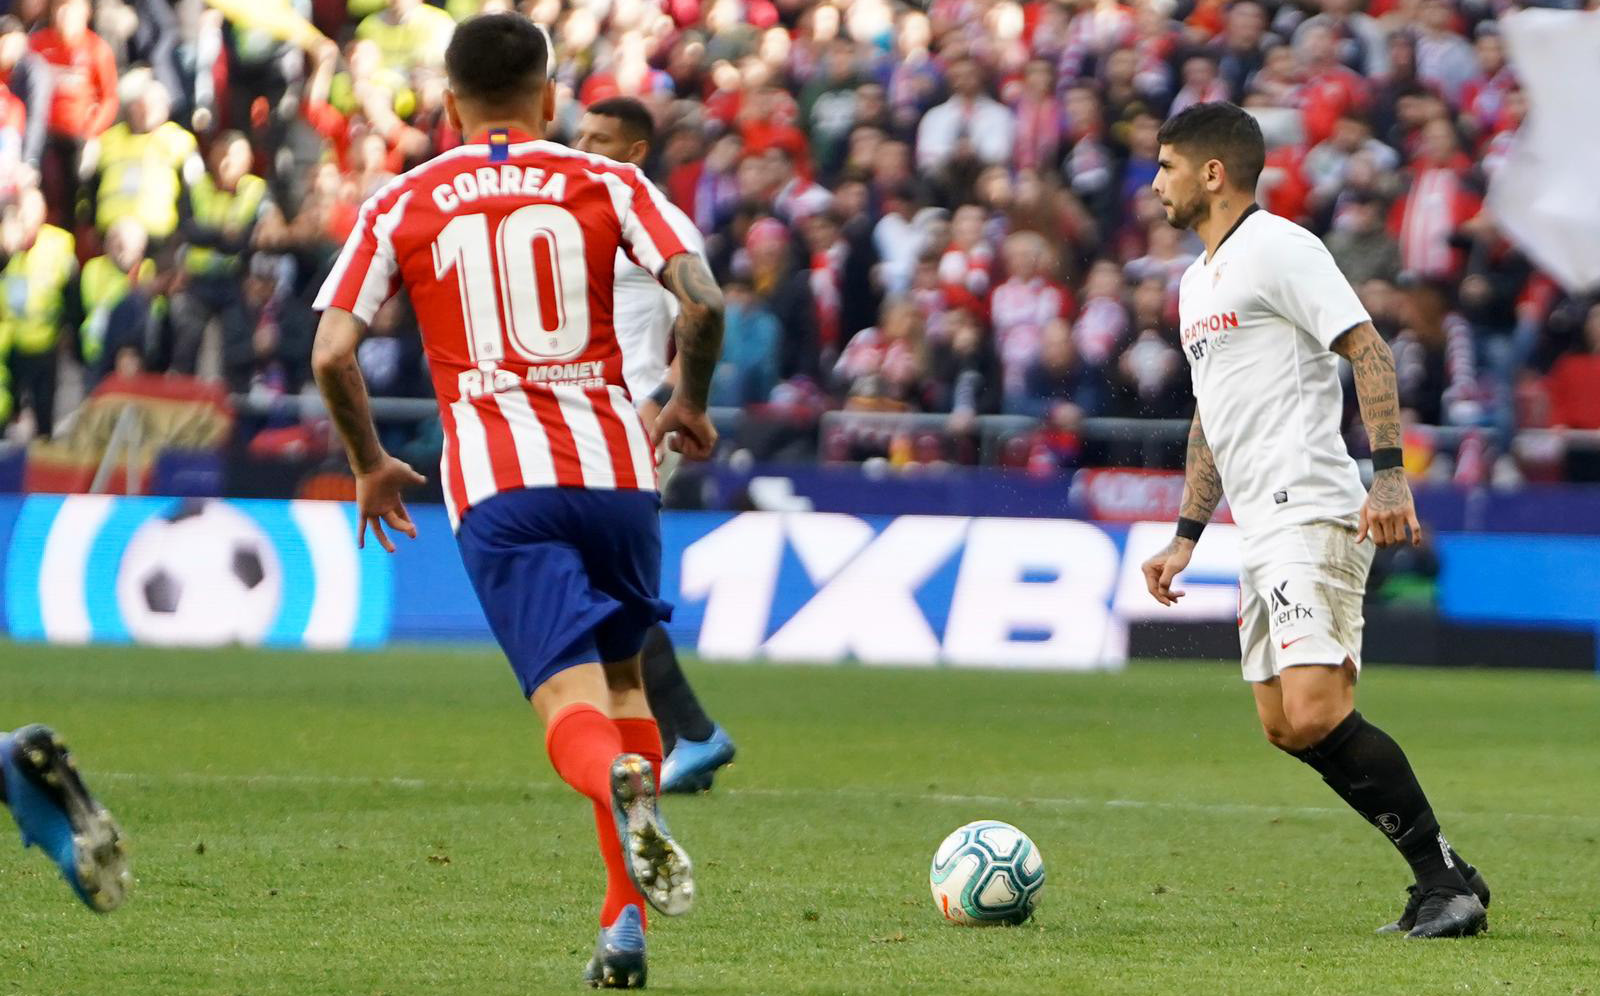 Banega in action against Atlético de Madrid